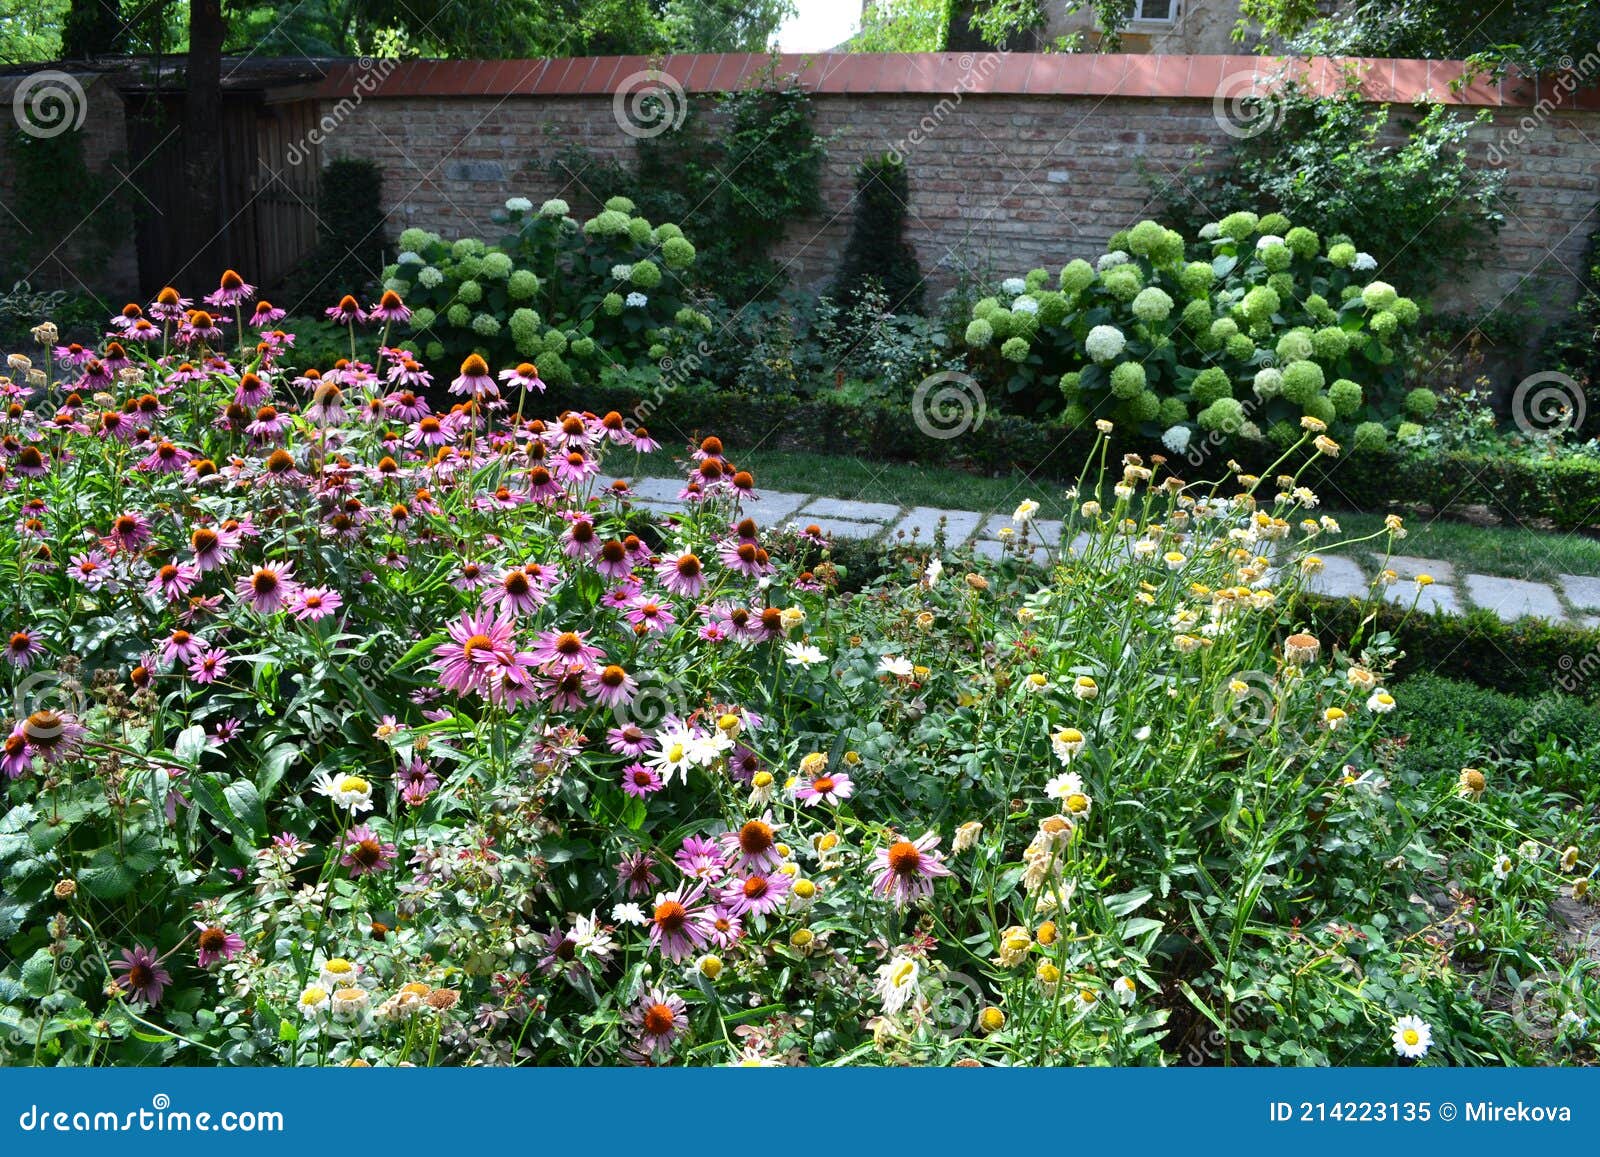 cottage summer perennials garden in schlosshof austria professionally planted with groups of perennials